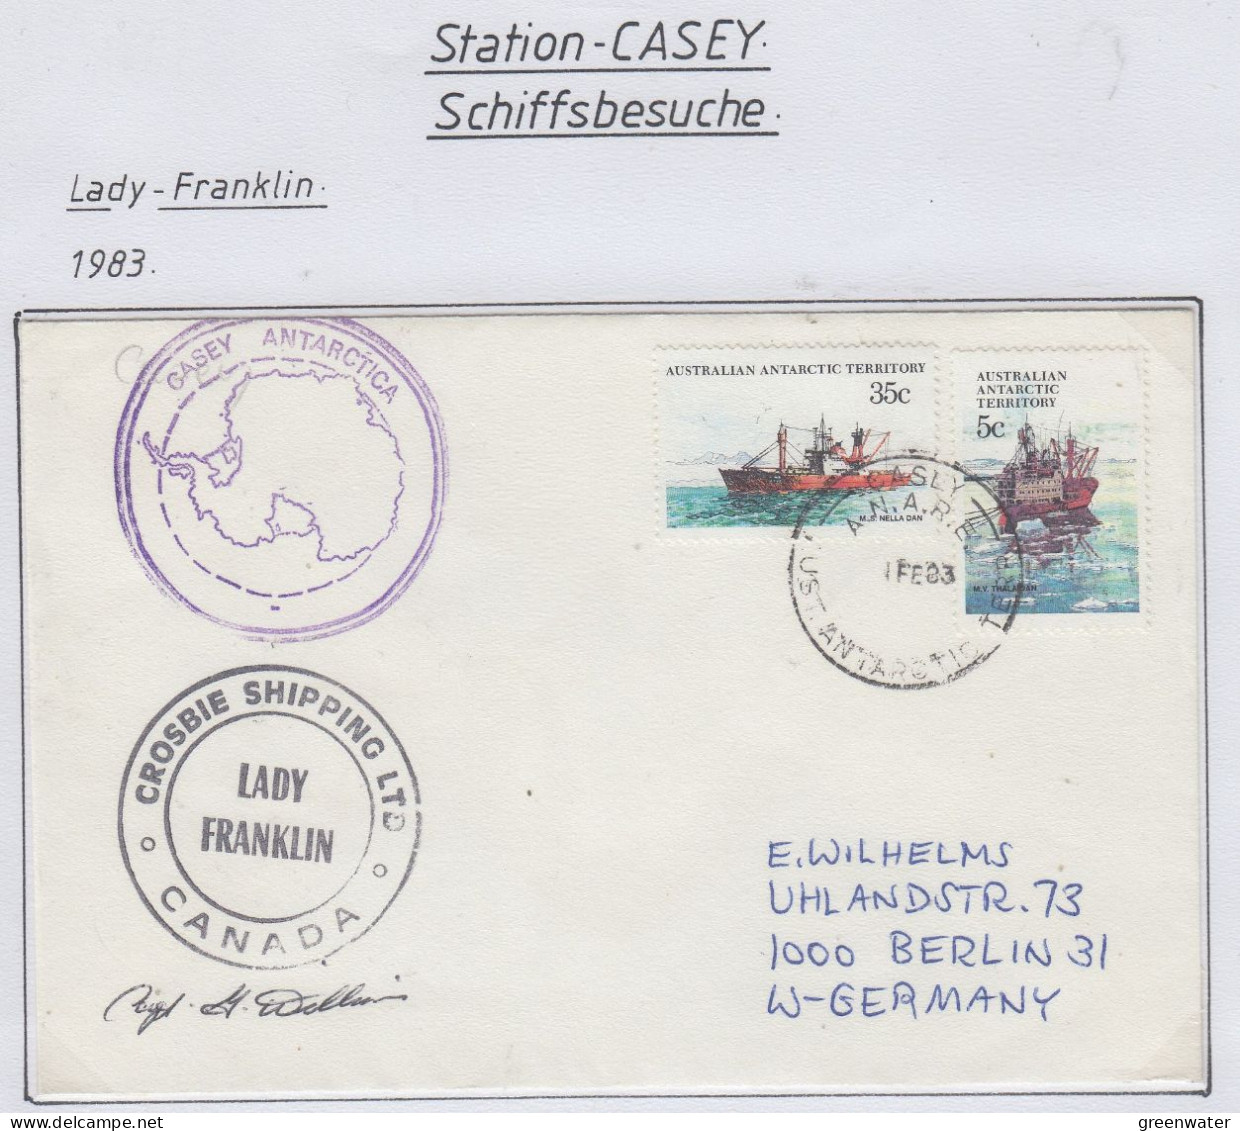 AAT  Ship Visit Lady Franklin Signature Ca Casey 1 FE 1983 (CS161) - Briefe U. Dokumente